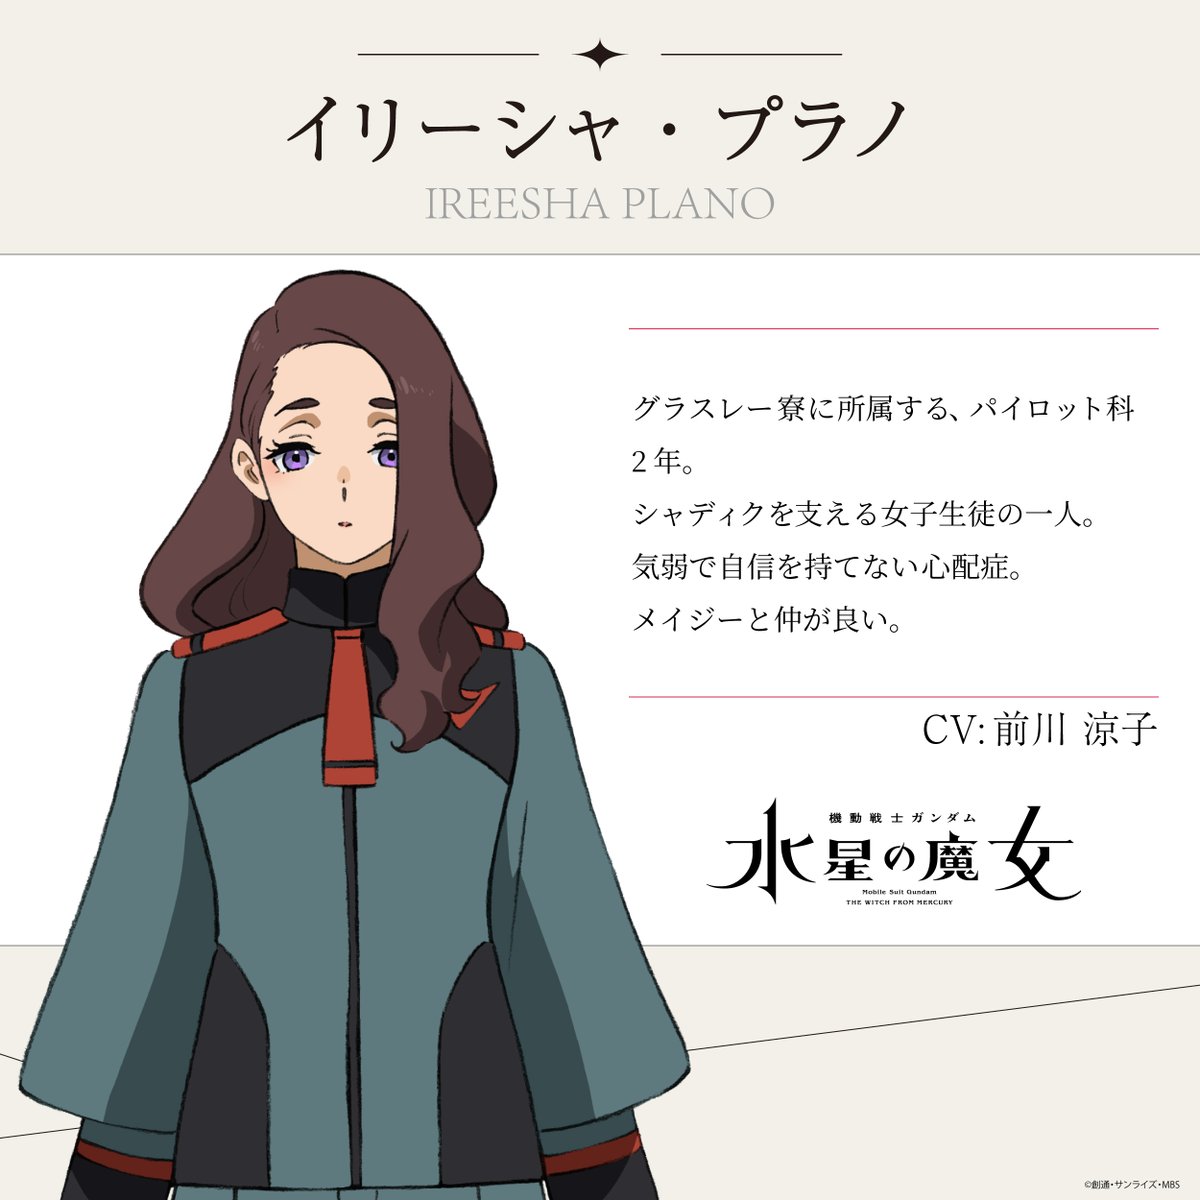 Mobile Suit Gundam: La bruja de Mercury Ryouko Maekawa como Ireesha Plano